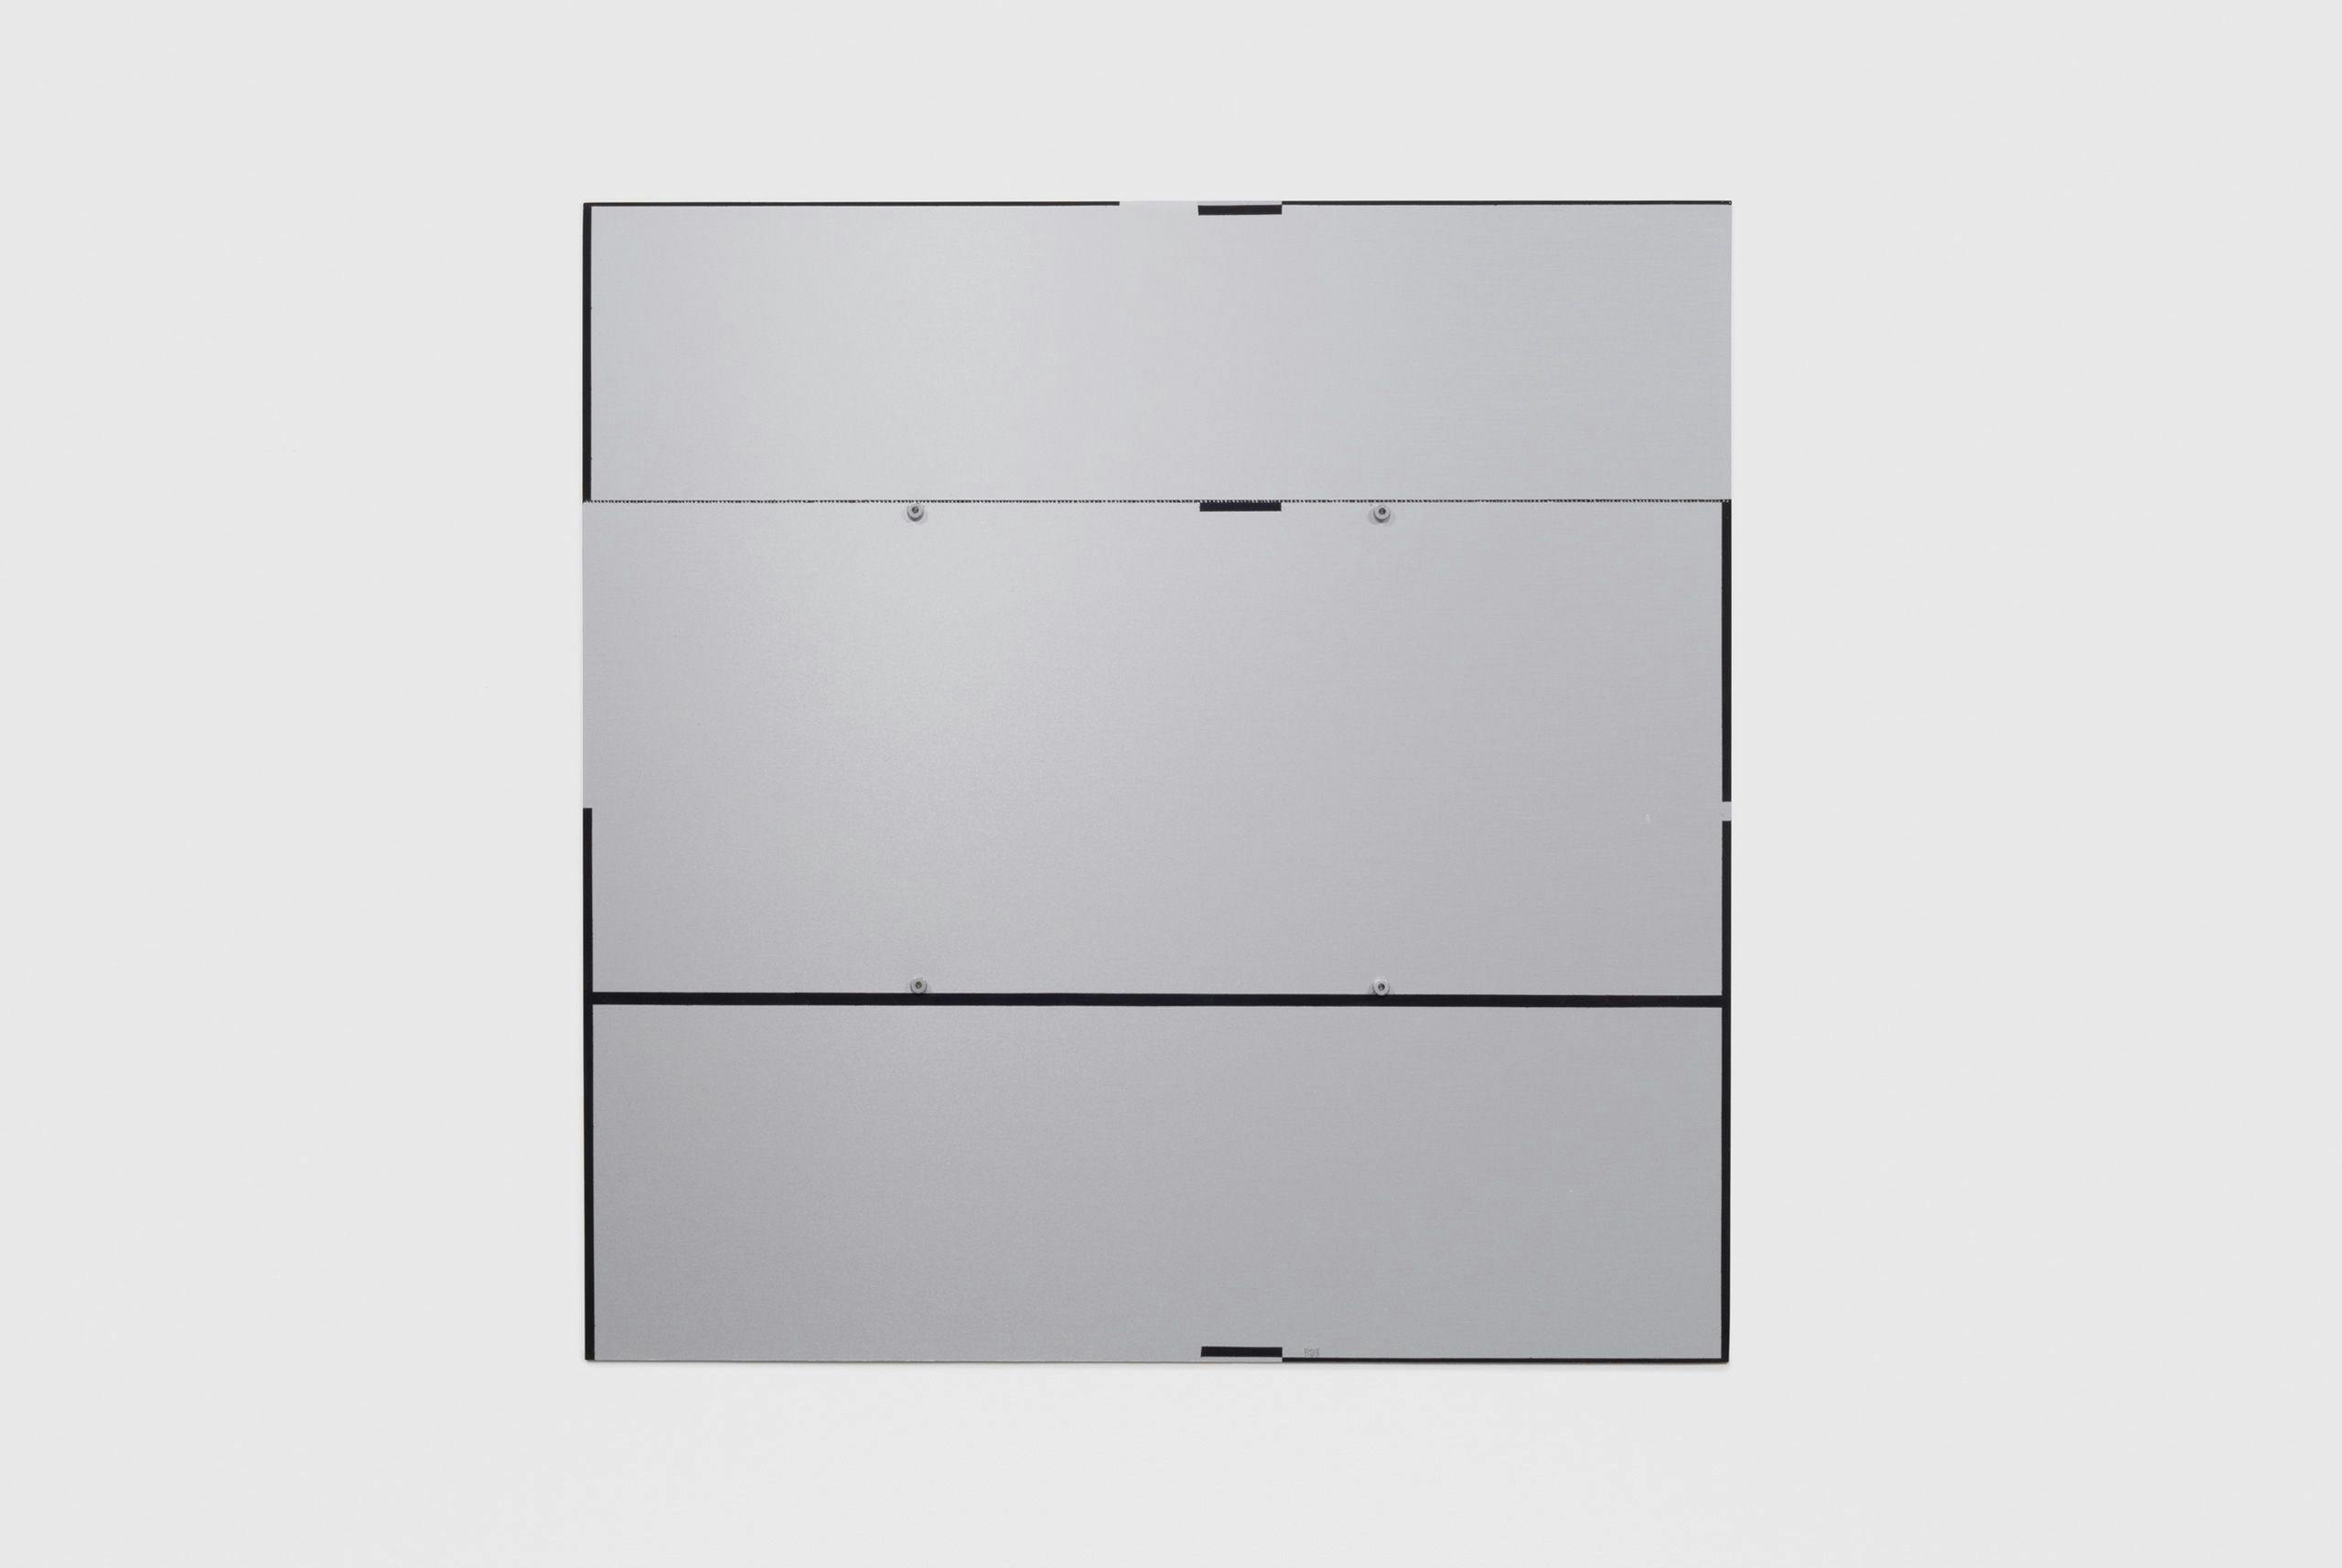 Aluminum panels by Robert Ryman titled Catalyst III, dated 1985